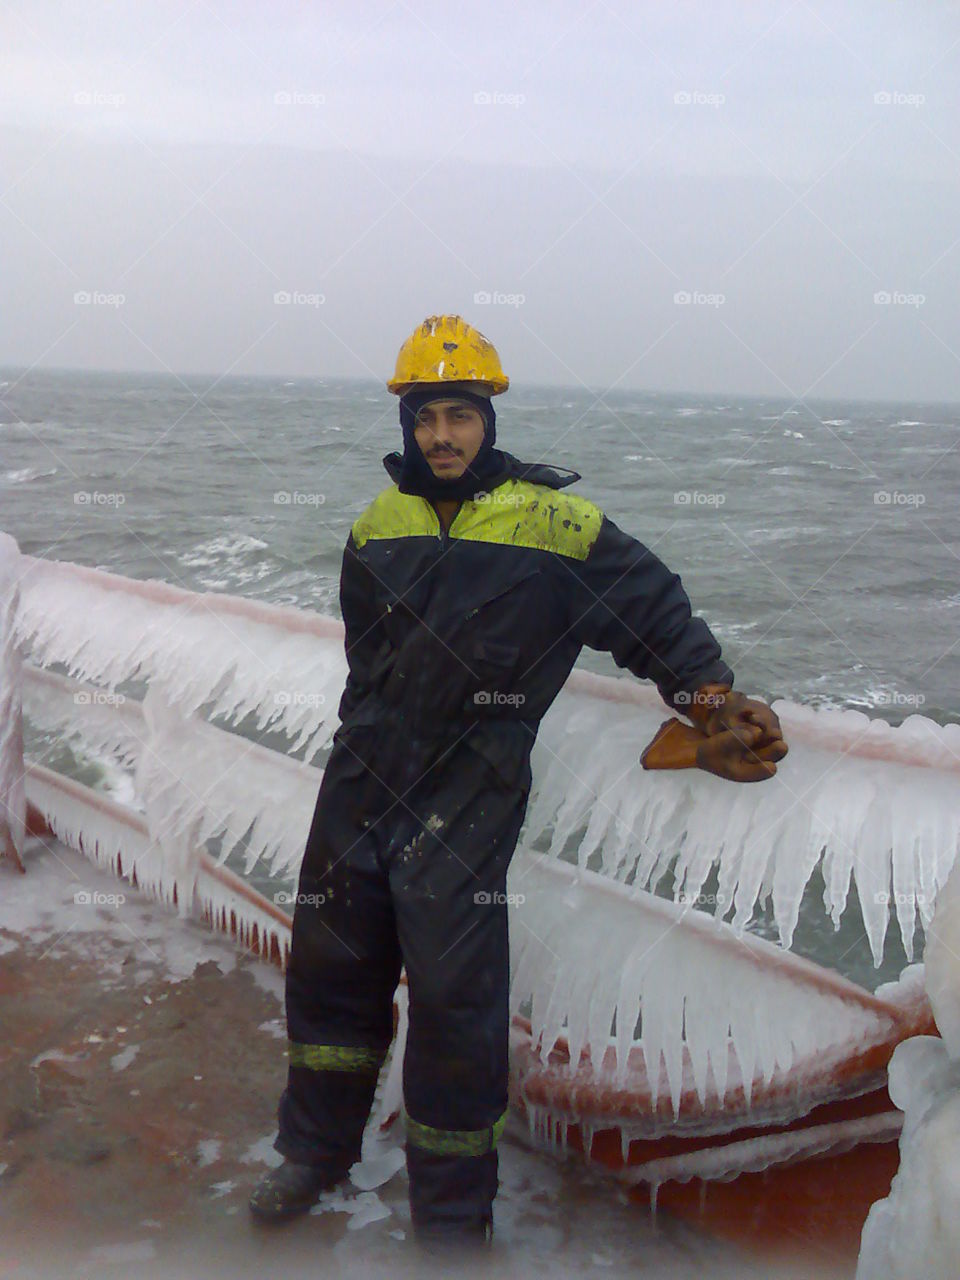 Ice on ship(Norway @ -18°c) Freezing 😱
At sea#Windy#